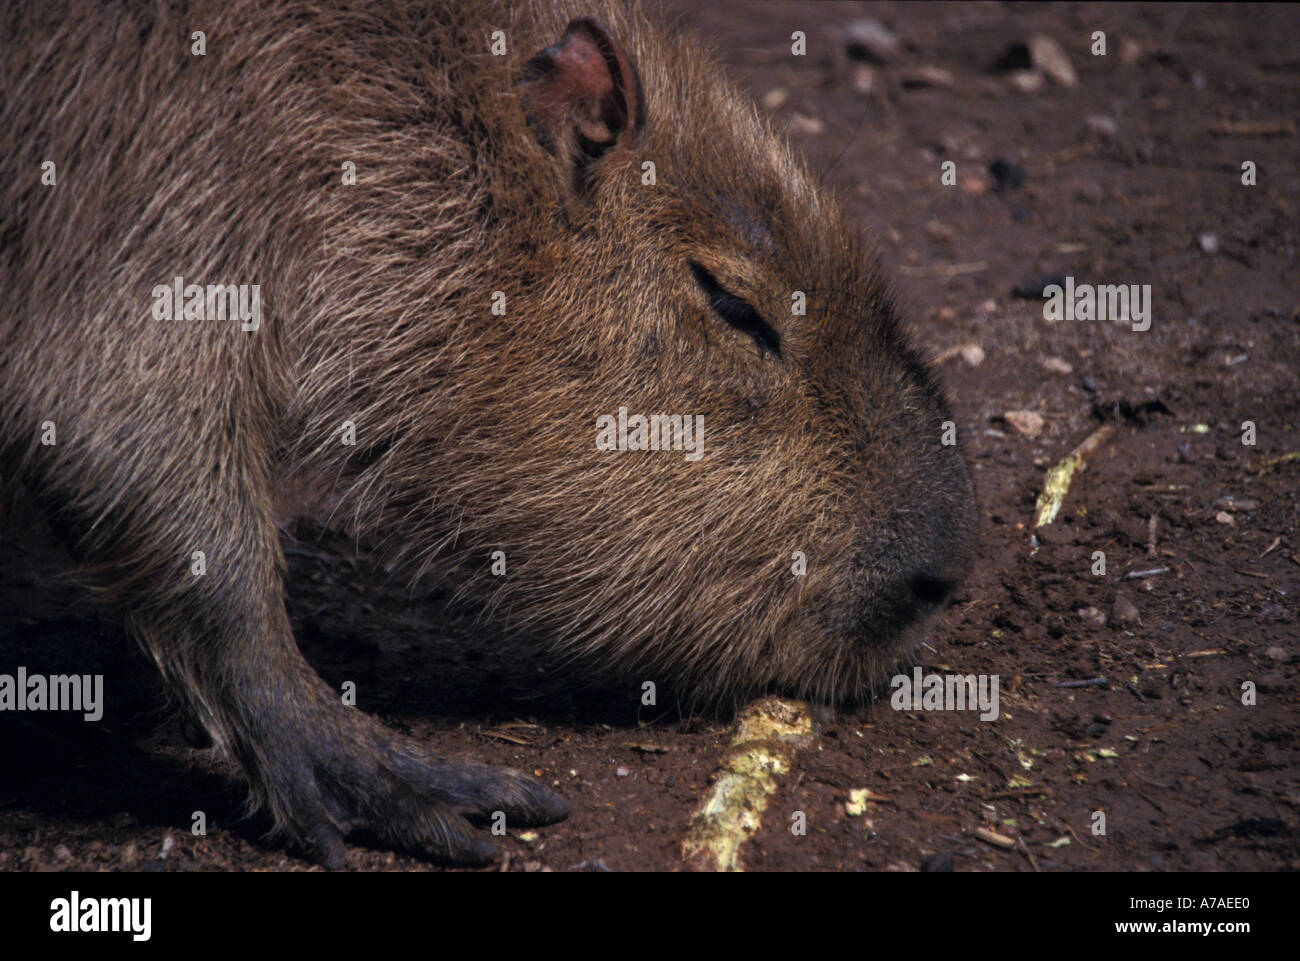 Capybara Hydrochoerus Hydrochaeris a semi aquatic rodent found in South America Stock Photo